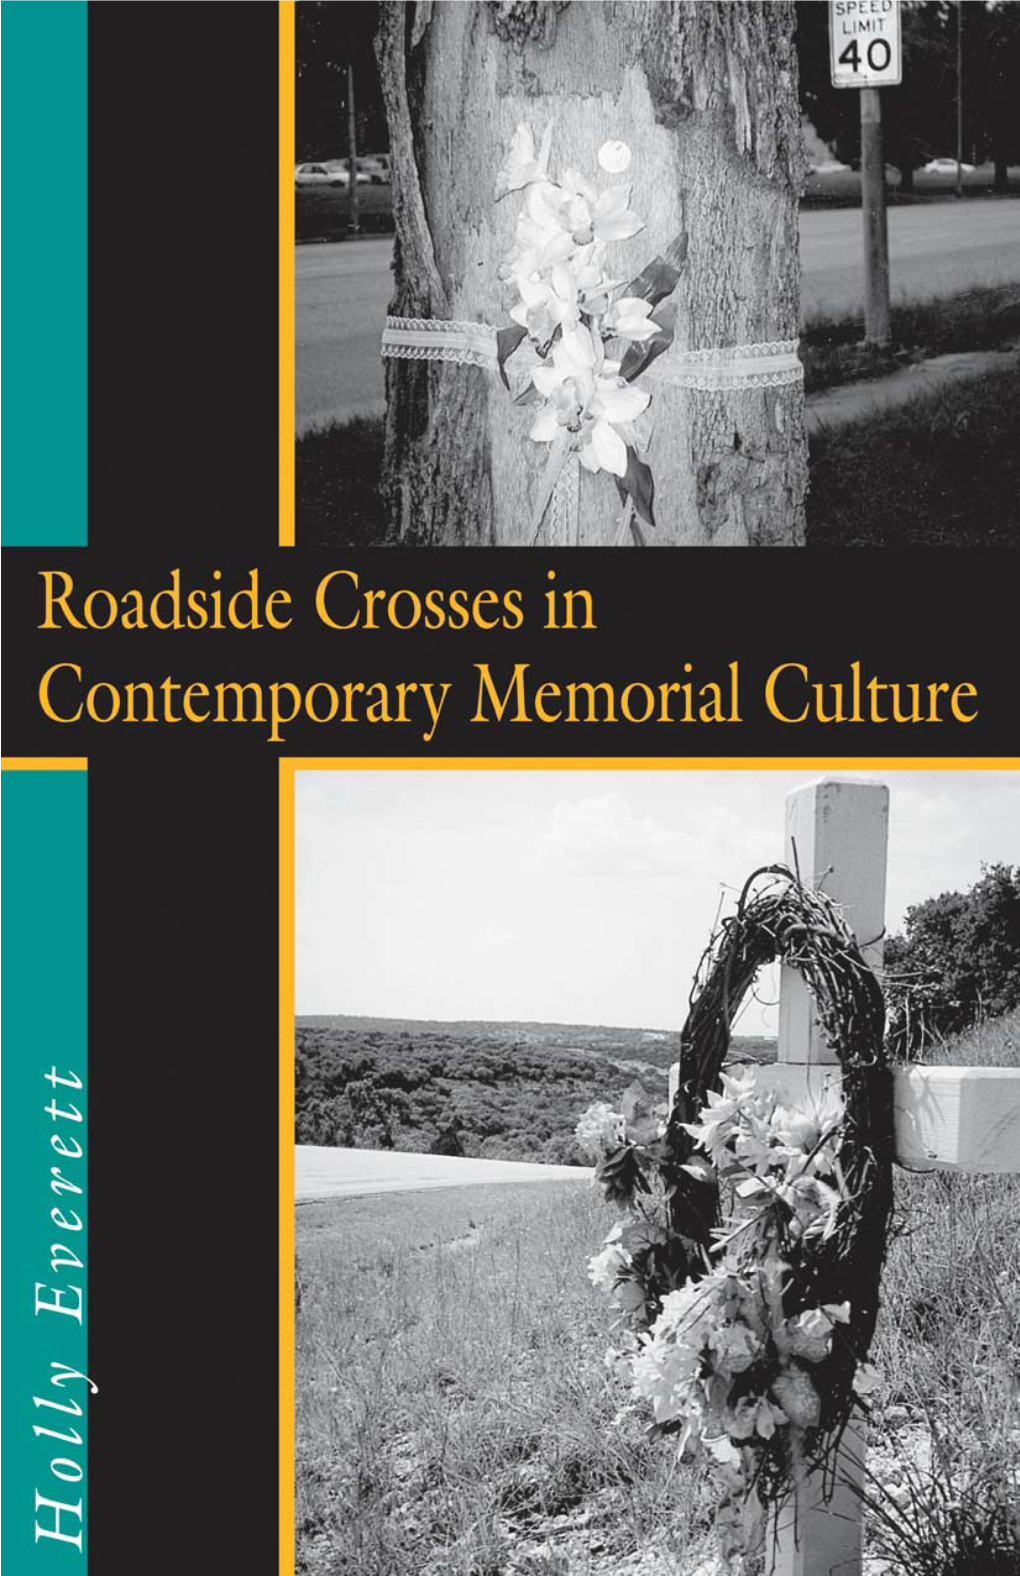 Roadside Crosses in Contemporary Memorial Culture